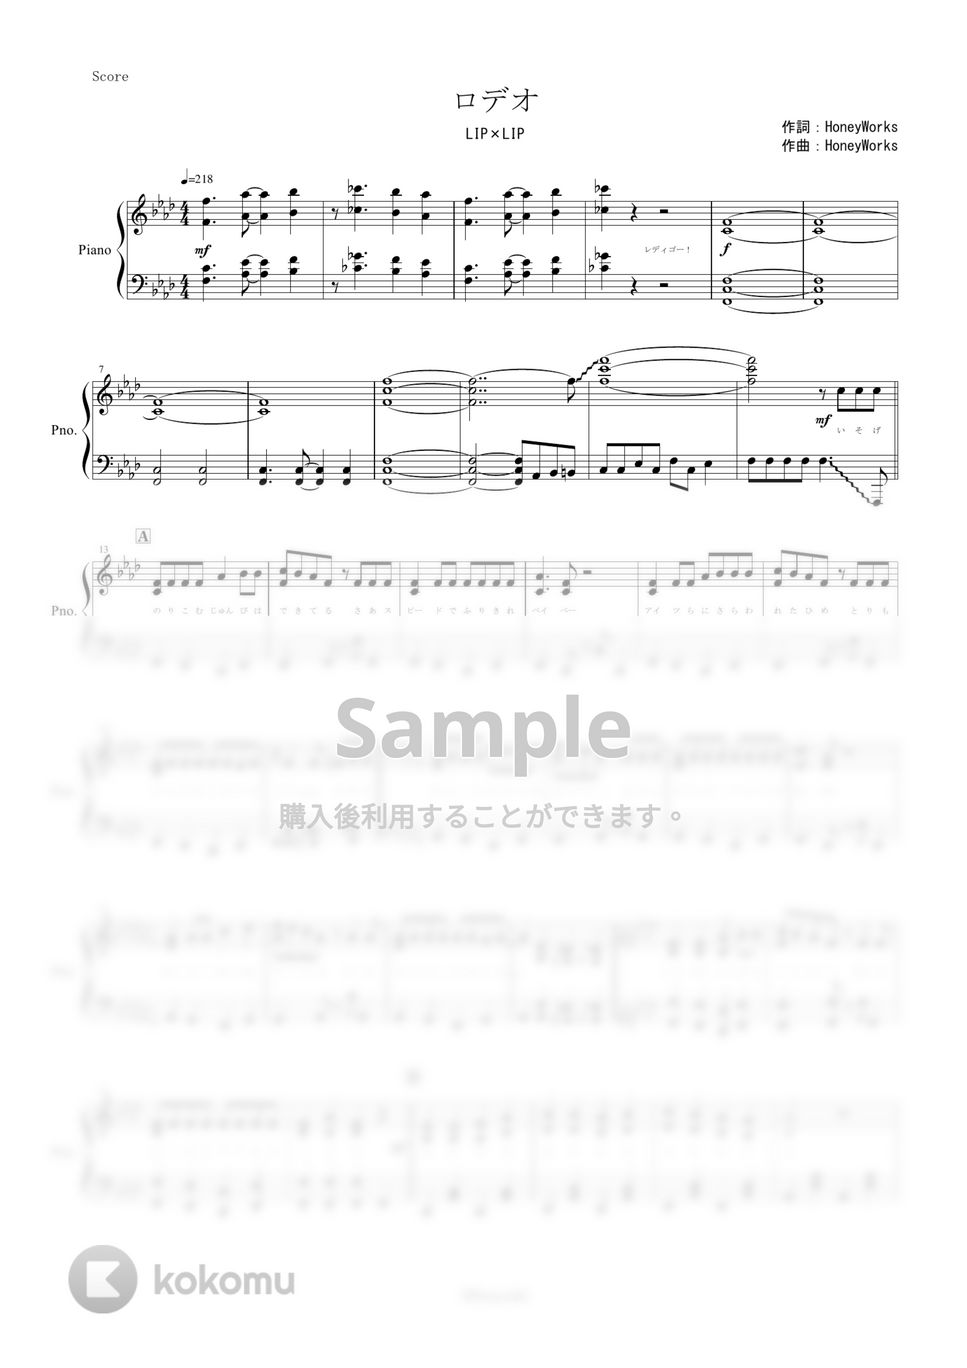 LIP×LIP - ロデオ (ピアノ楽譜/全６ページ) by yoshi